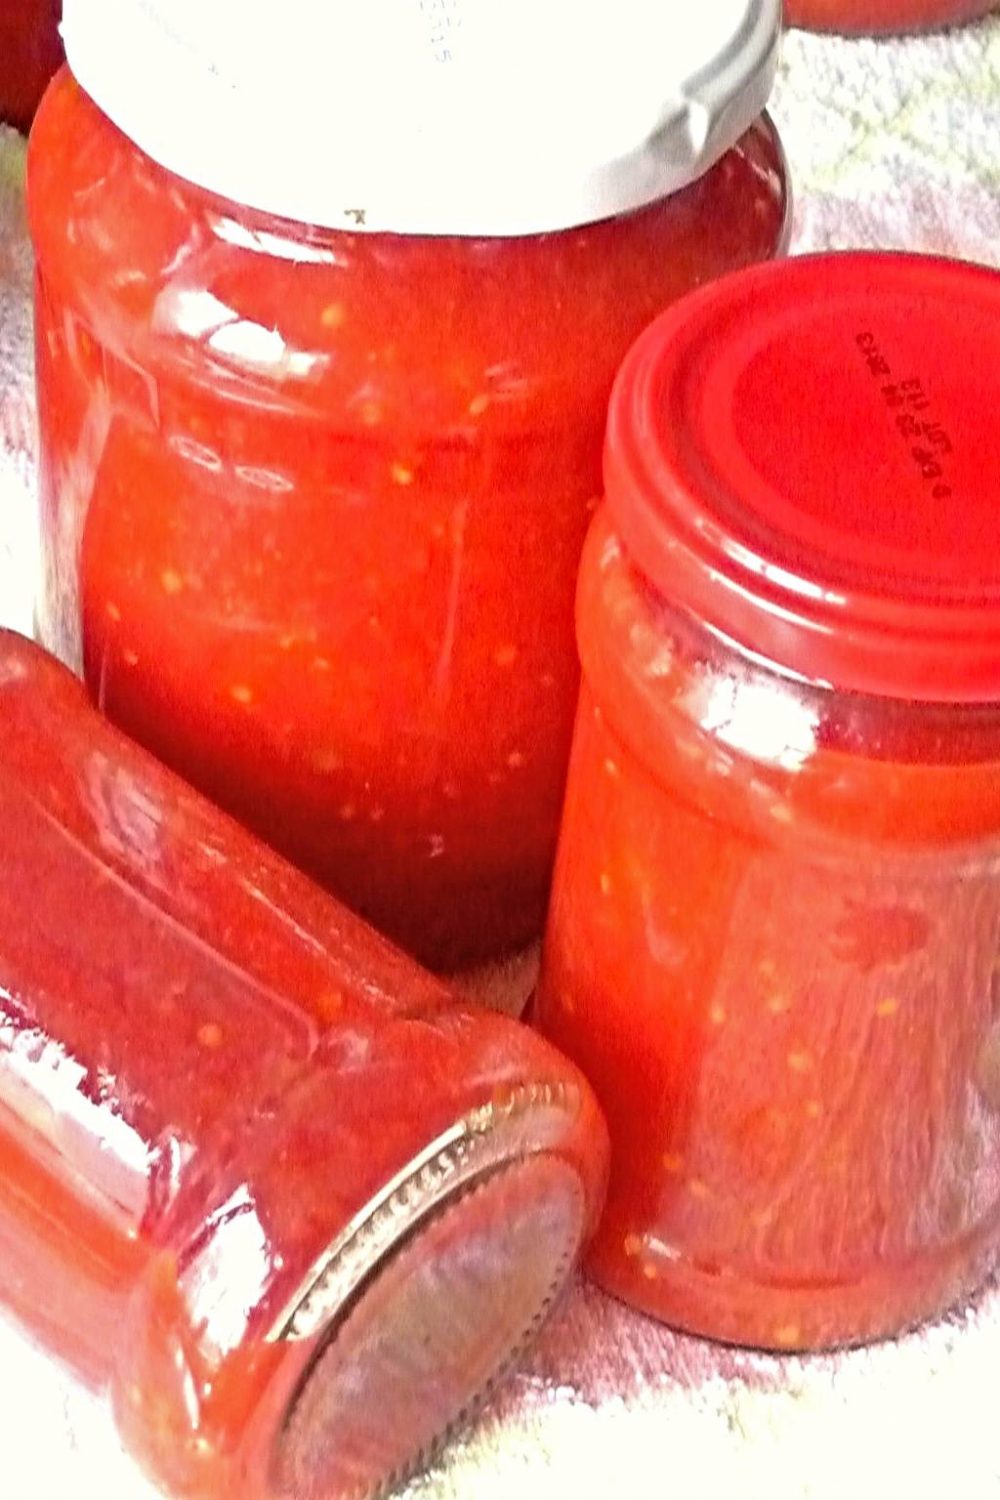 Preparing jars for canning